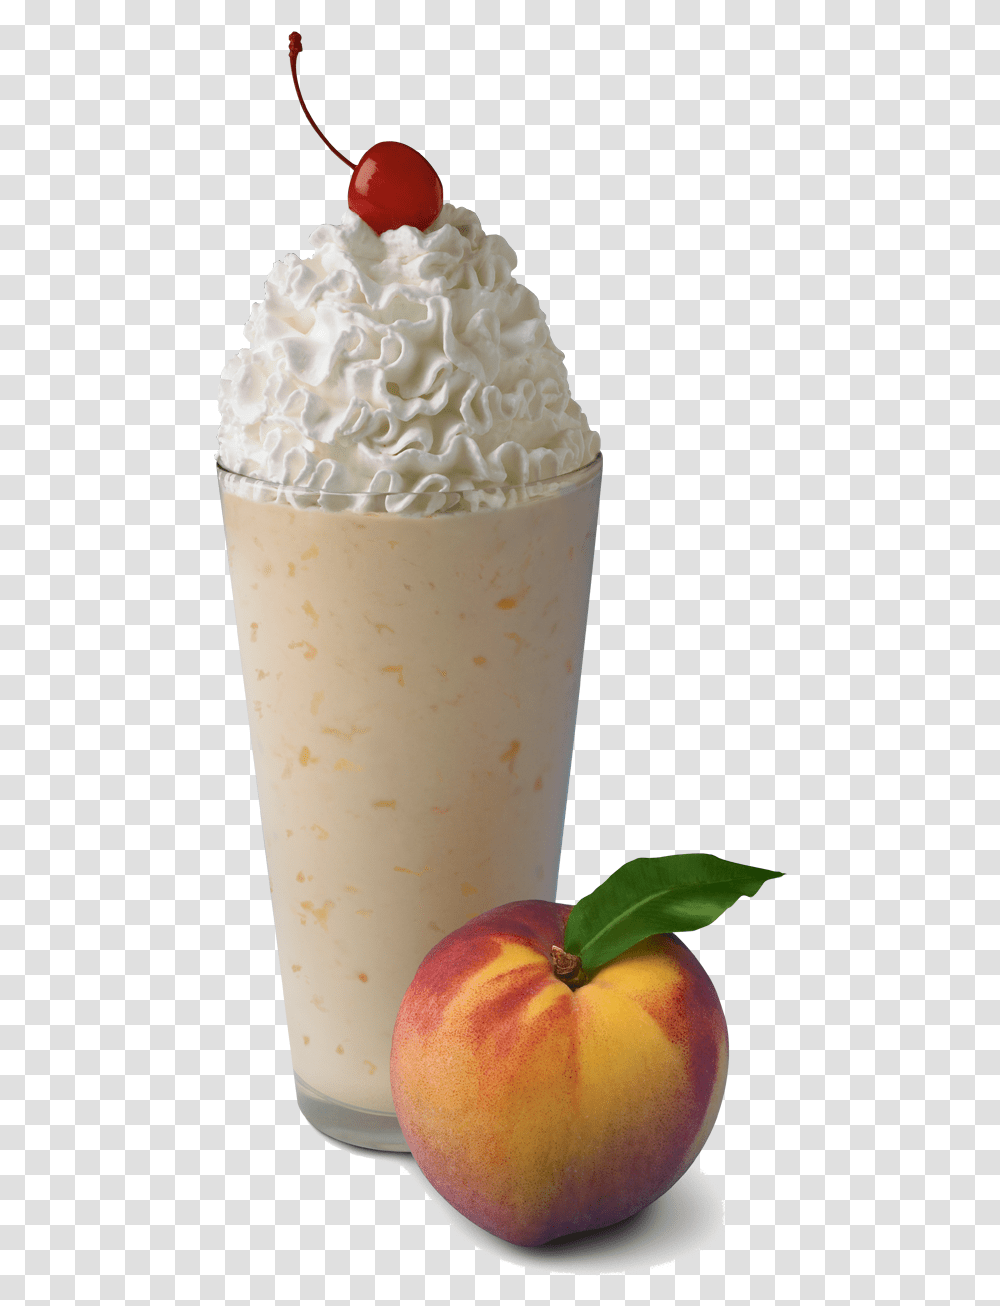 Chick Fil A Peach Milkshake 2018, Beverage, Drink, Ice Cream, Dessert Transparent Png